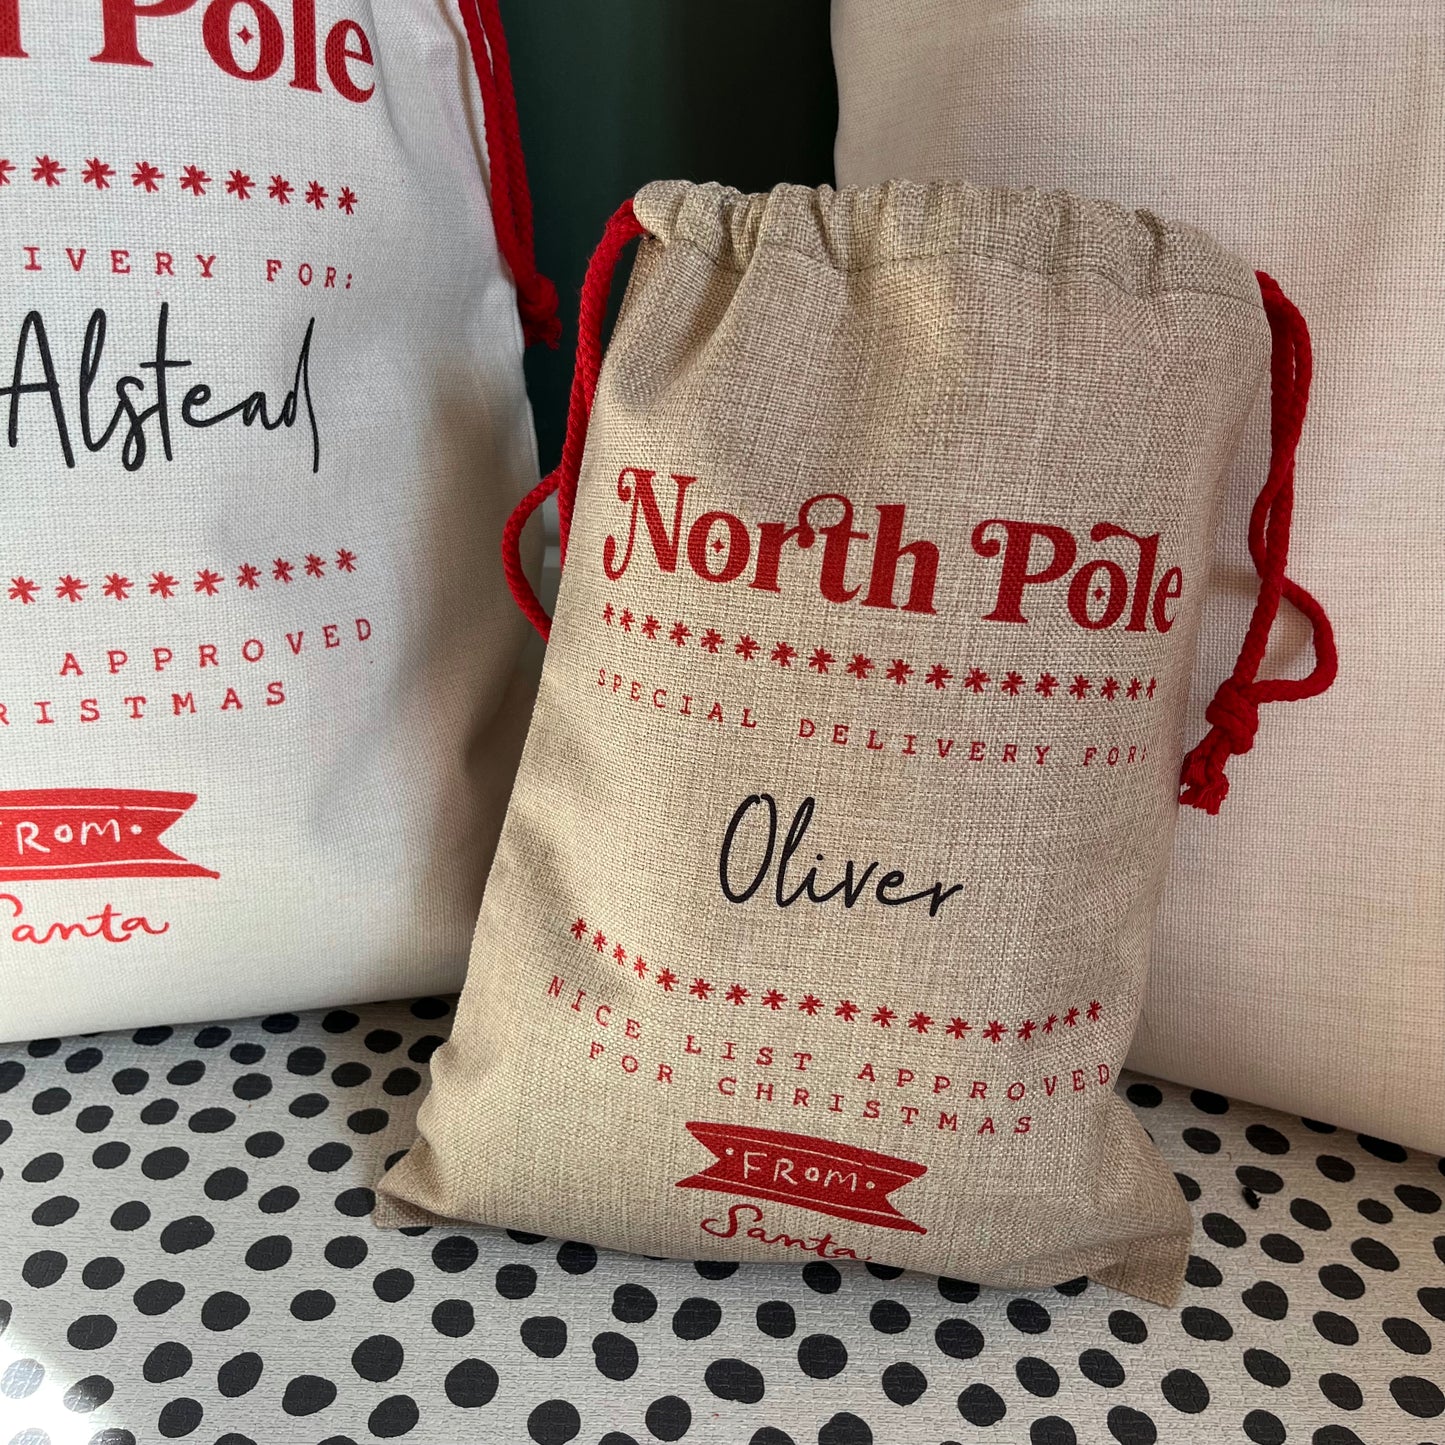 North Pole Personalised Christmas Sack